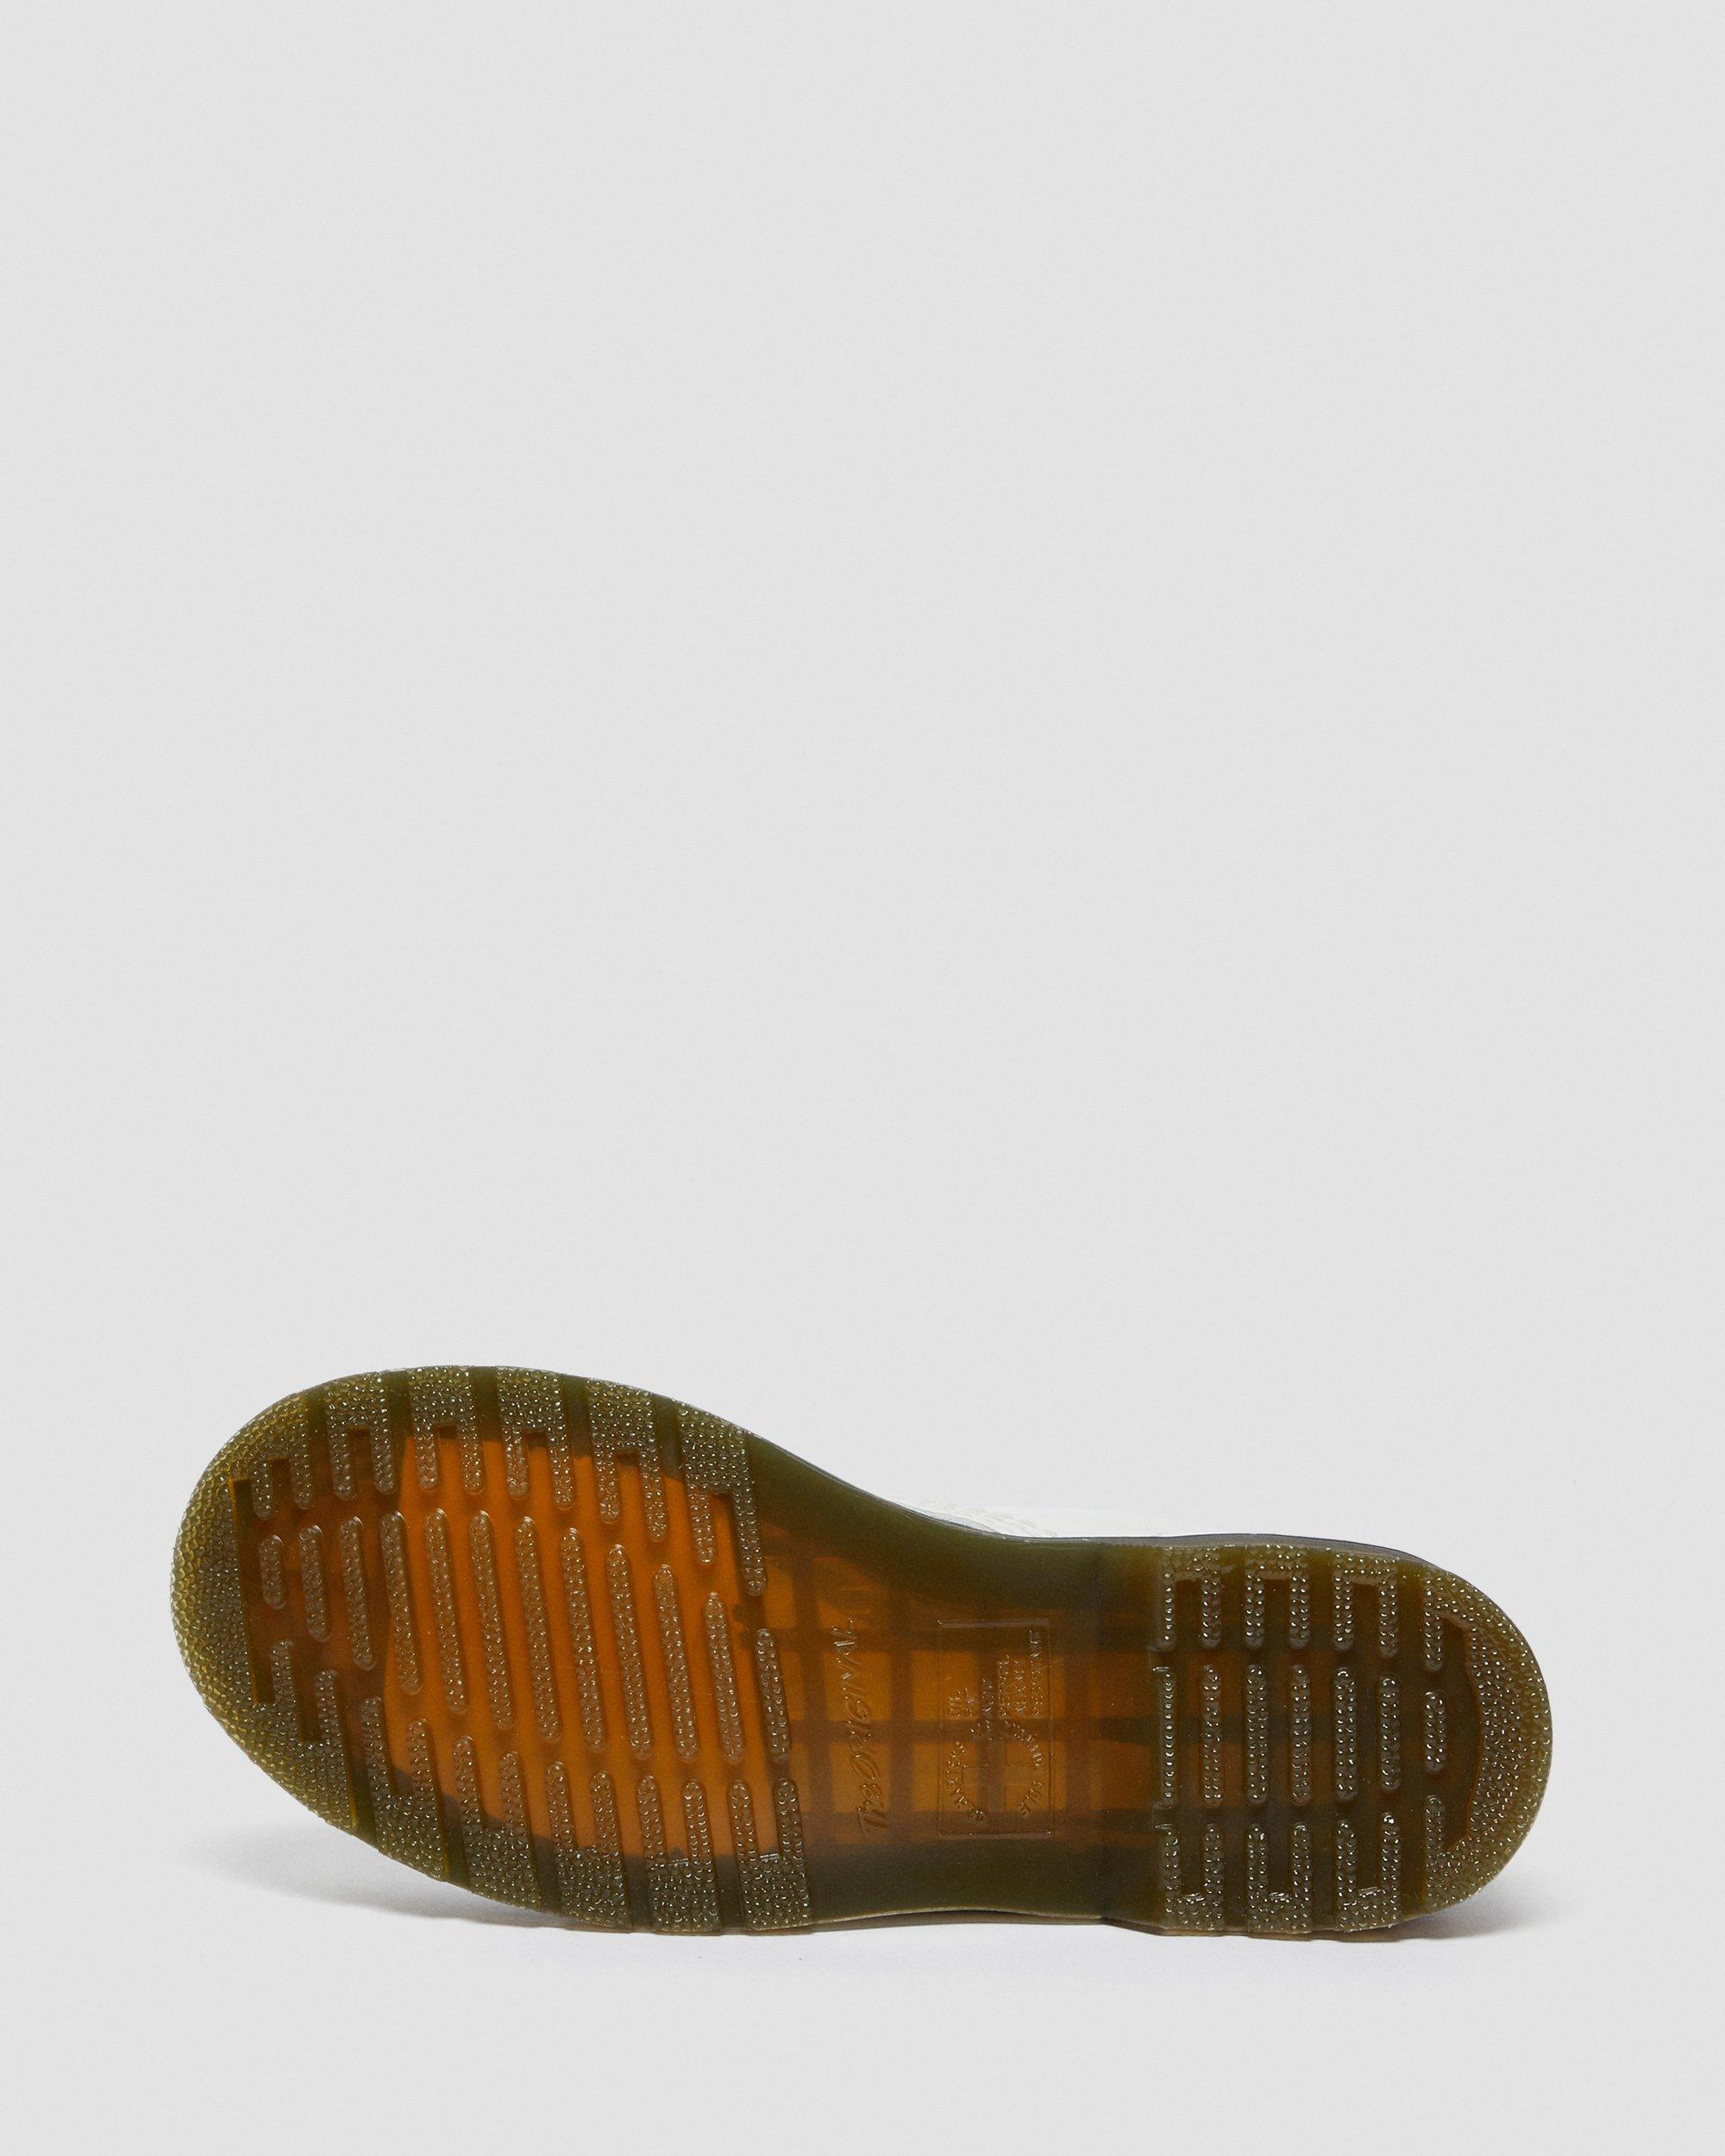 Beperkingen slepen Transparant 1460 Women's Pascal Virginia Leather Boots | Dr. Martens